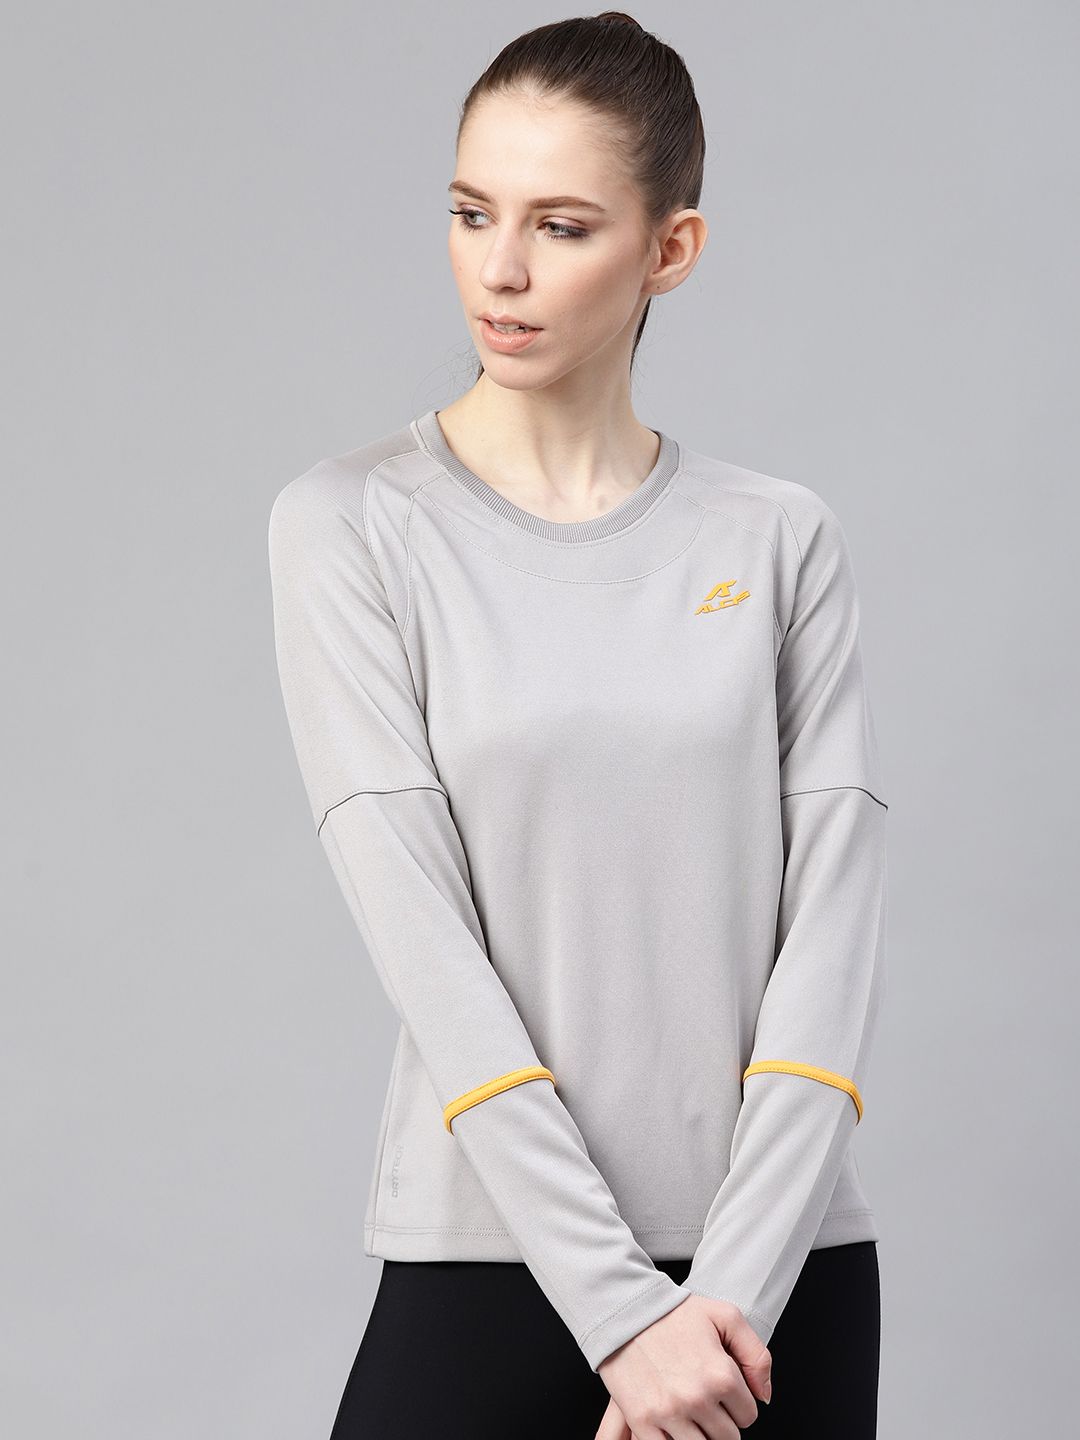 Alcis Women Grey Solid Round Neck Tennis T-shirt Price in India